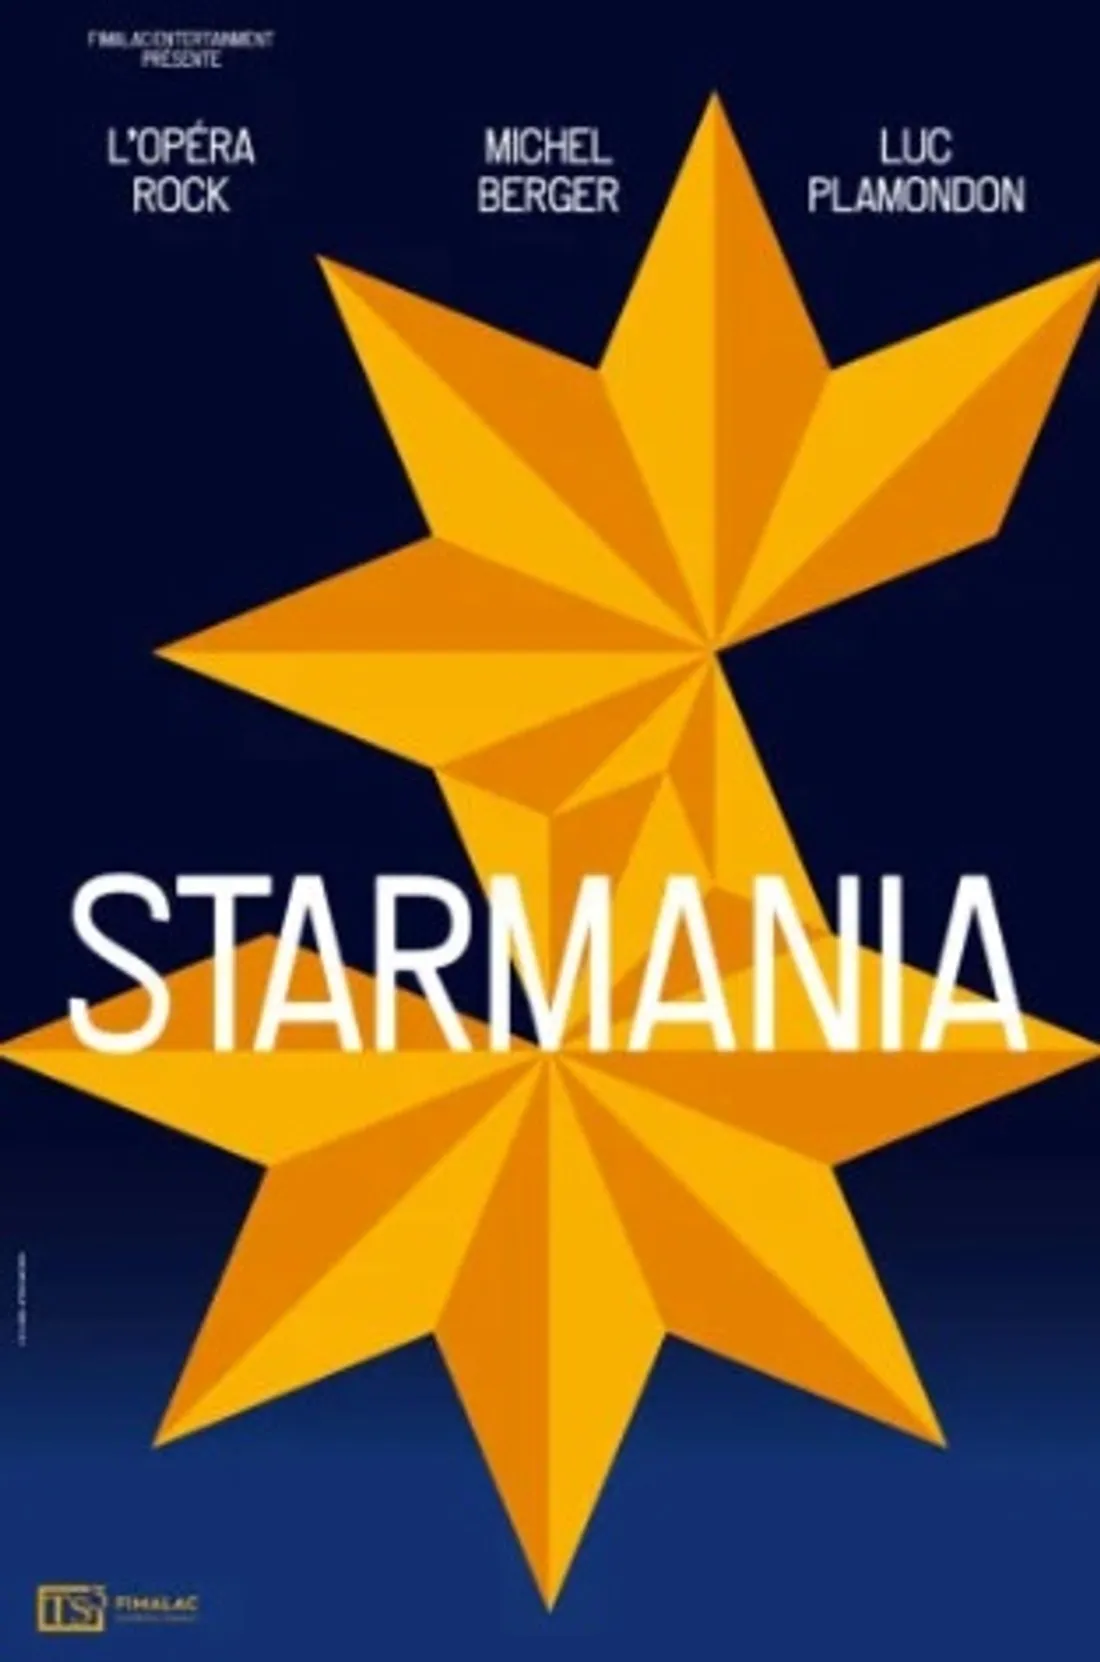 Le phénomène "Starmania" revient à Dijon